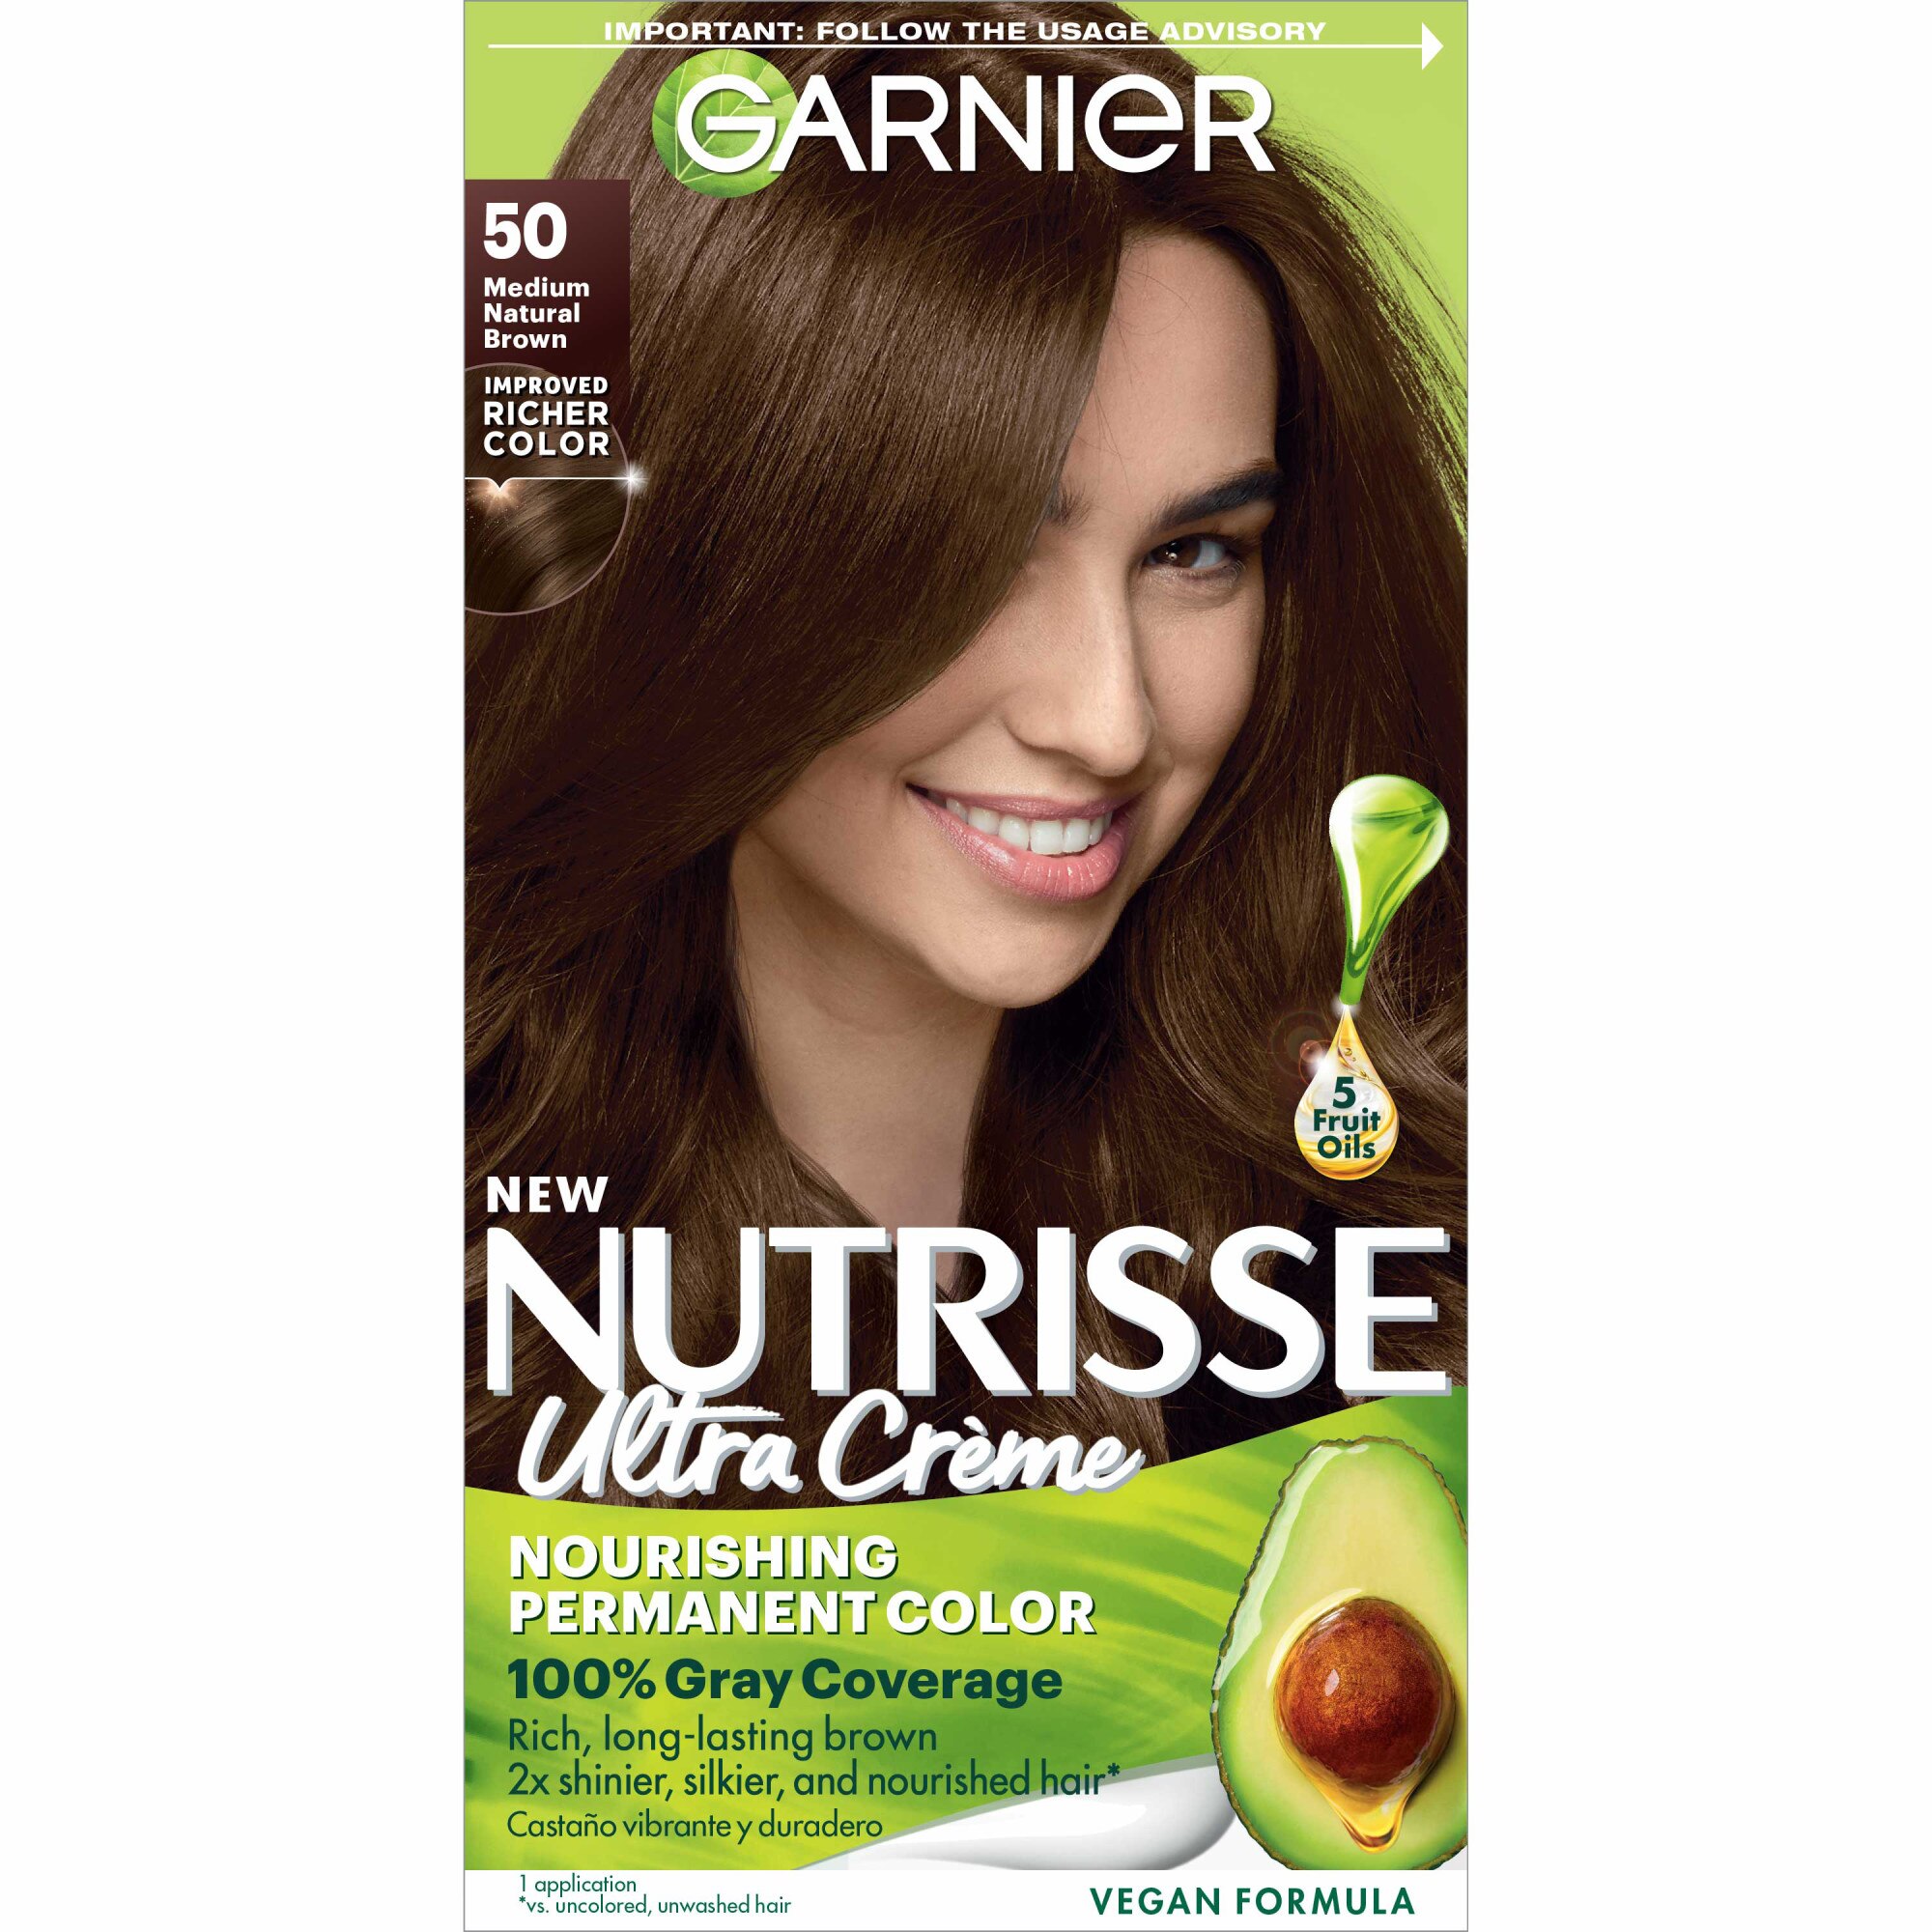 Garnier Nutrisse Nourishing Permanent Hair Color Creme, 50 Medium Brown , CVS